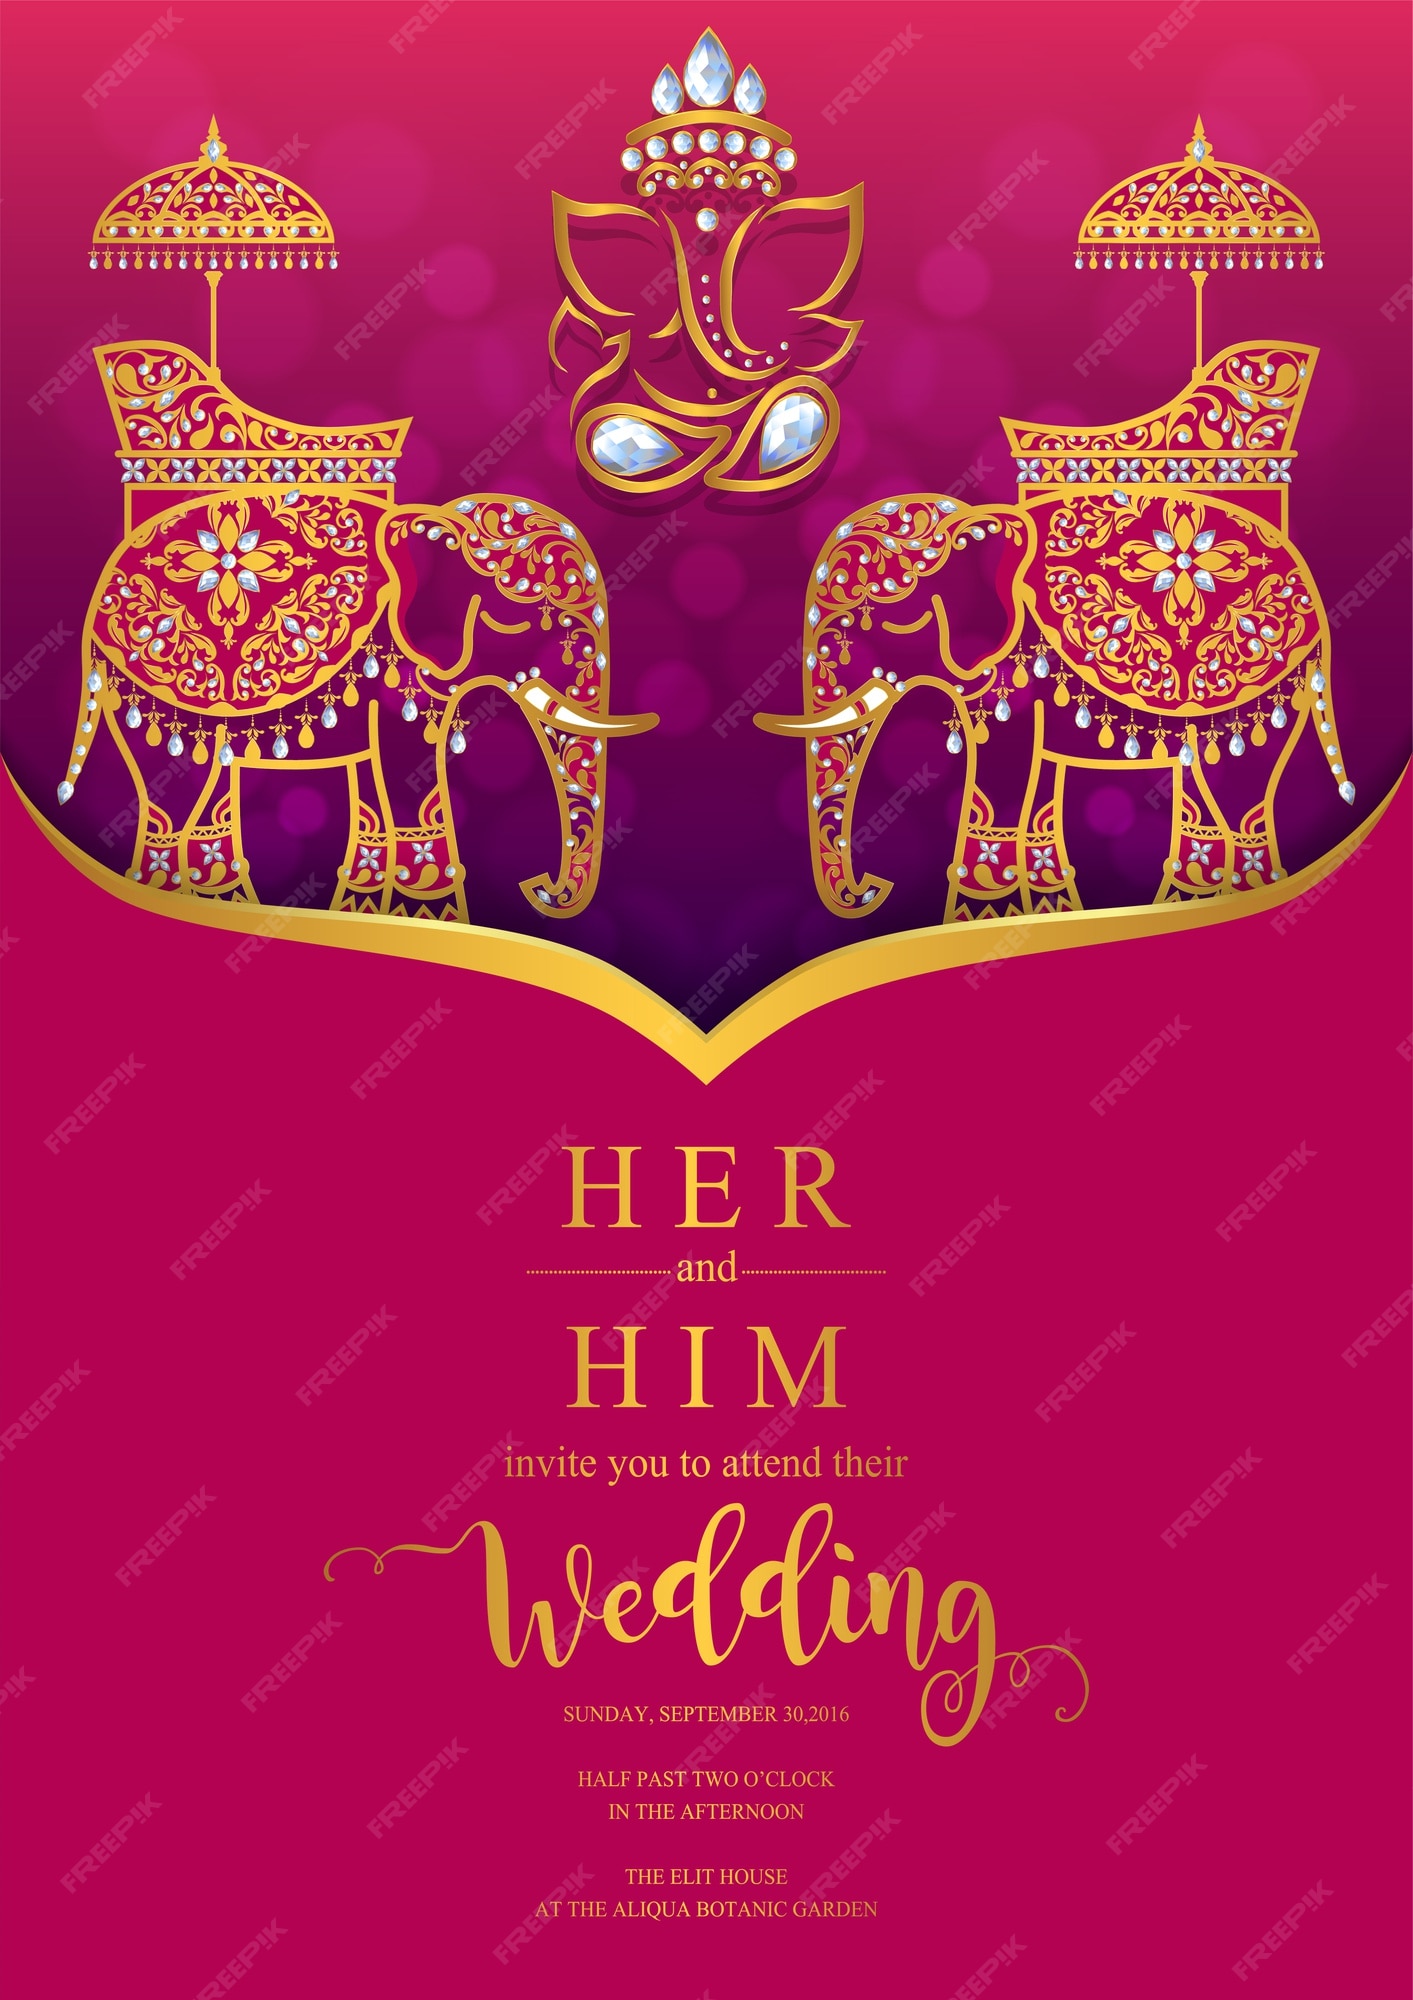 Hindu wedding invitation Vectors & Illustrations for Free Download | Freepik